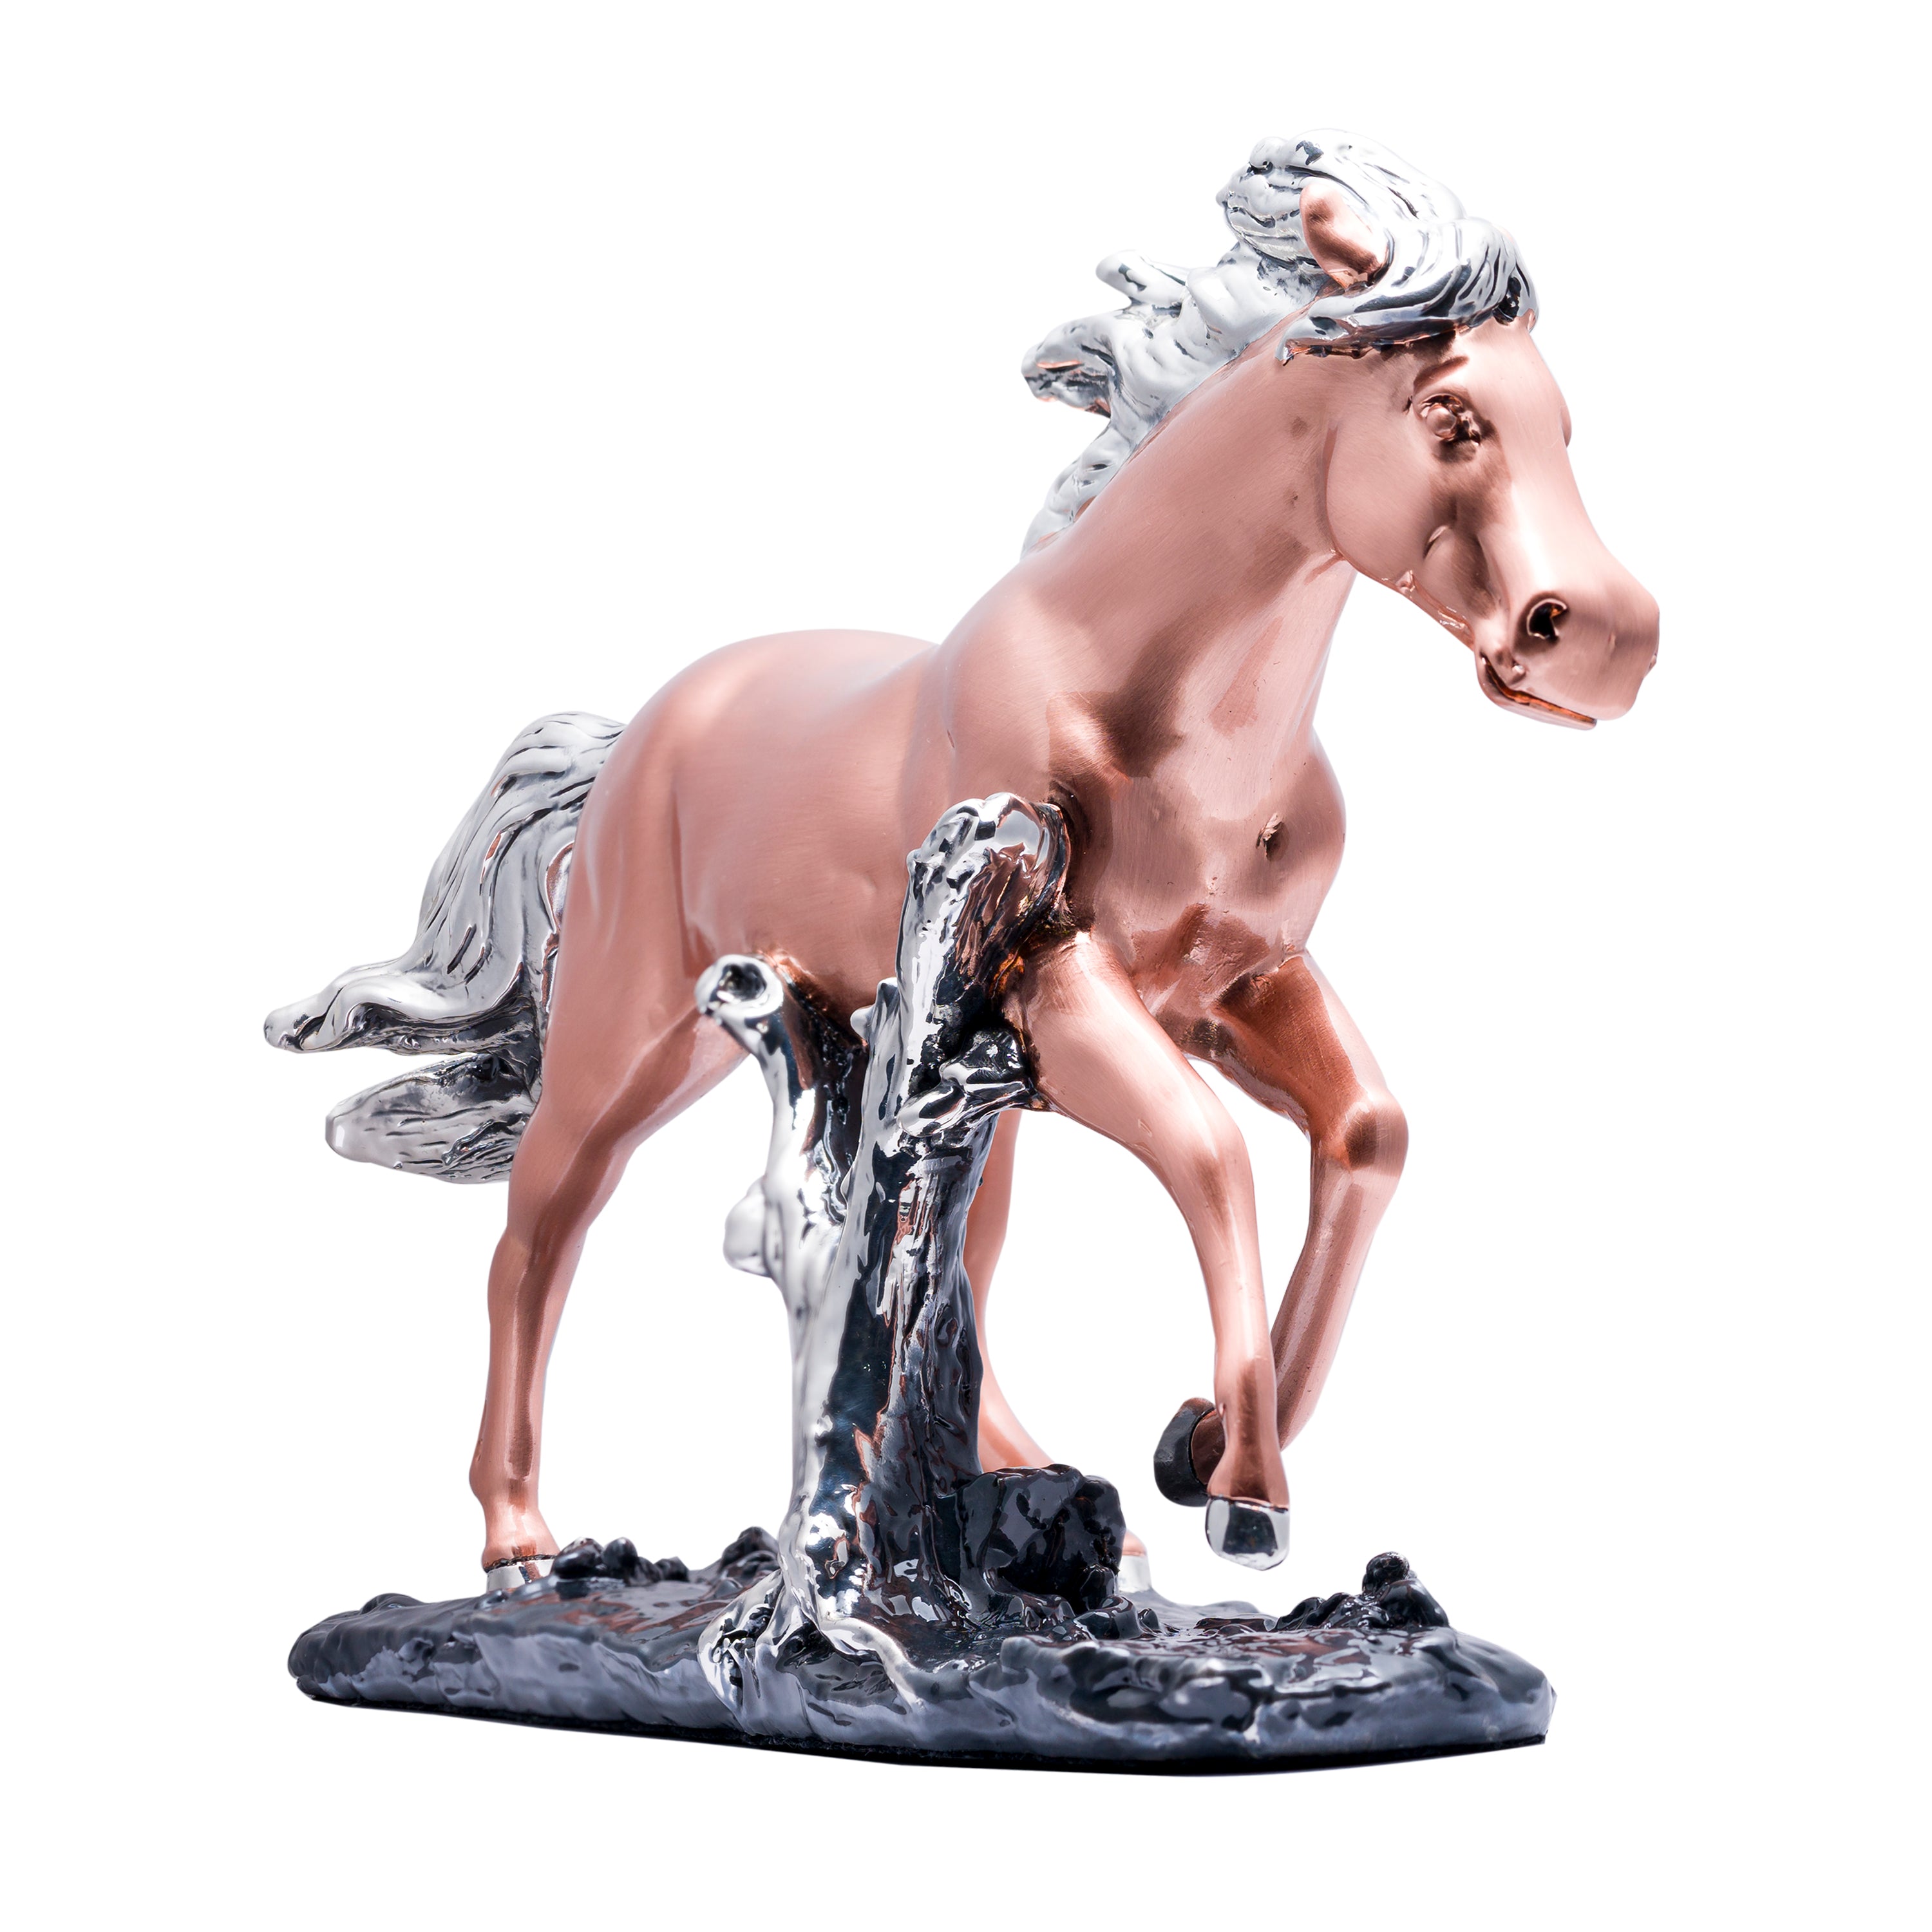 SU.SOT.A090 - Silver and Copper Running Horse Sculpture